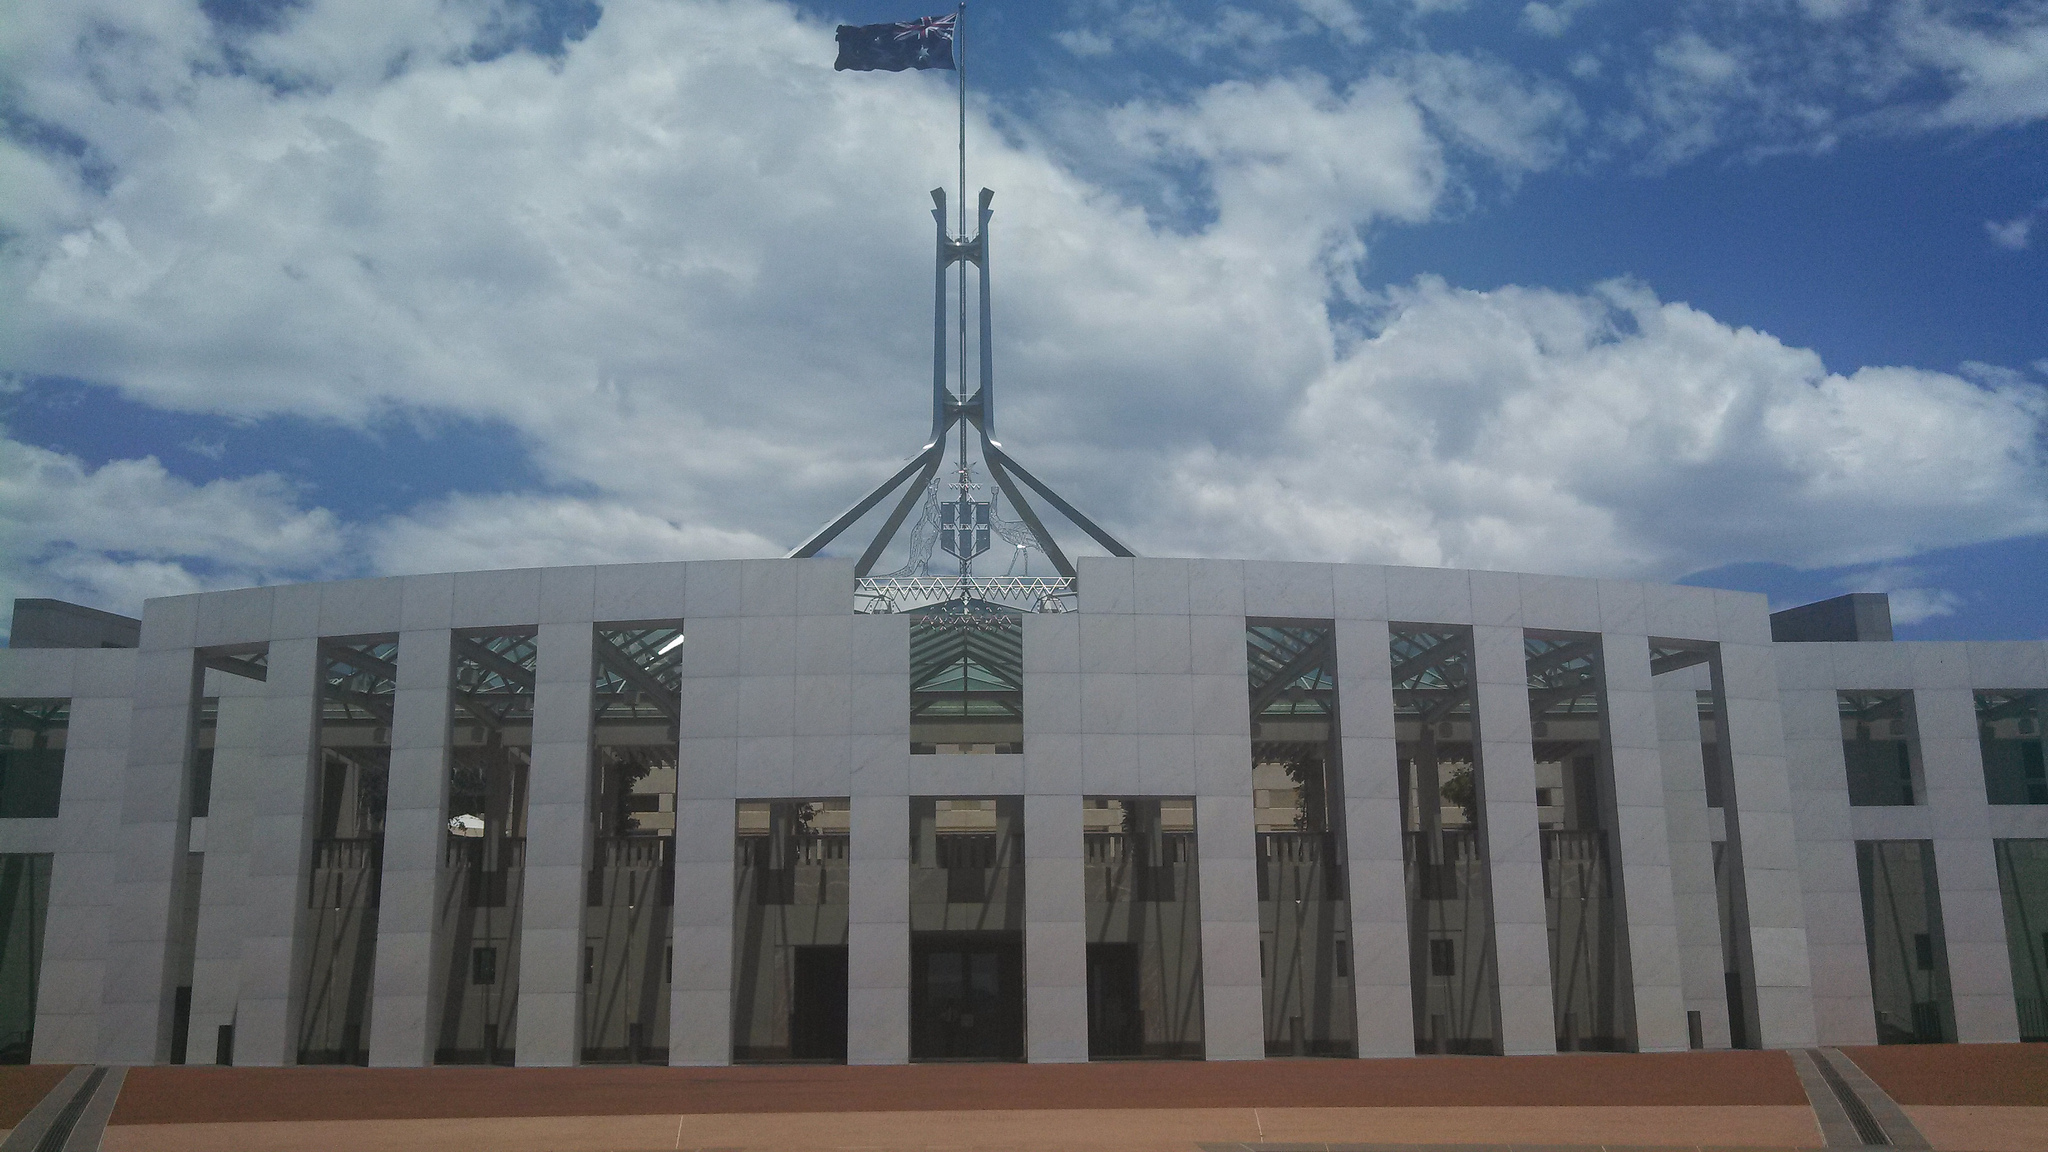 Parliament House, Canberra, Australia (Sarah J/Flickr/CC BY-ND 2.0)